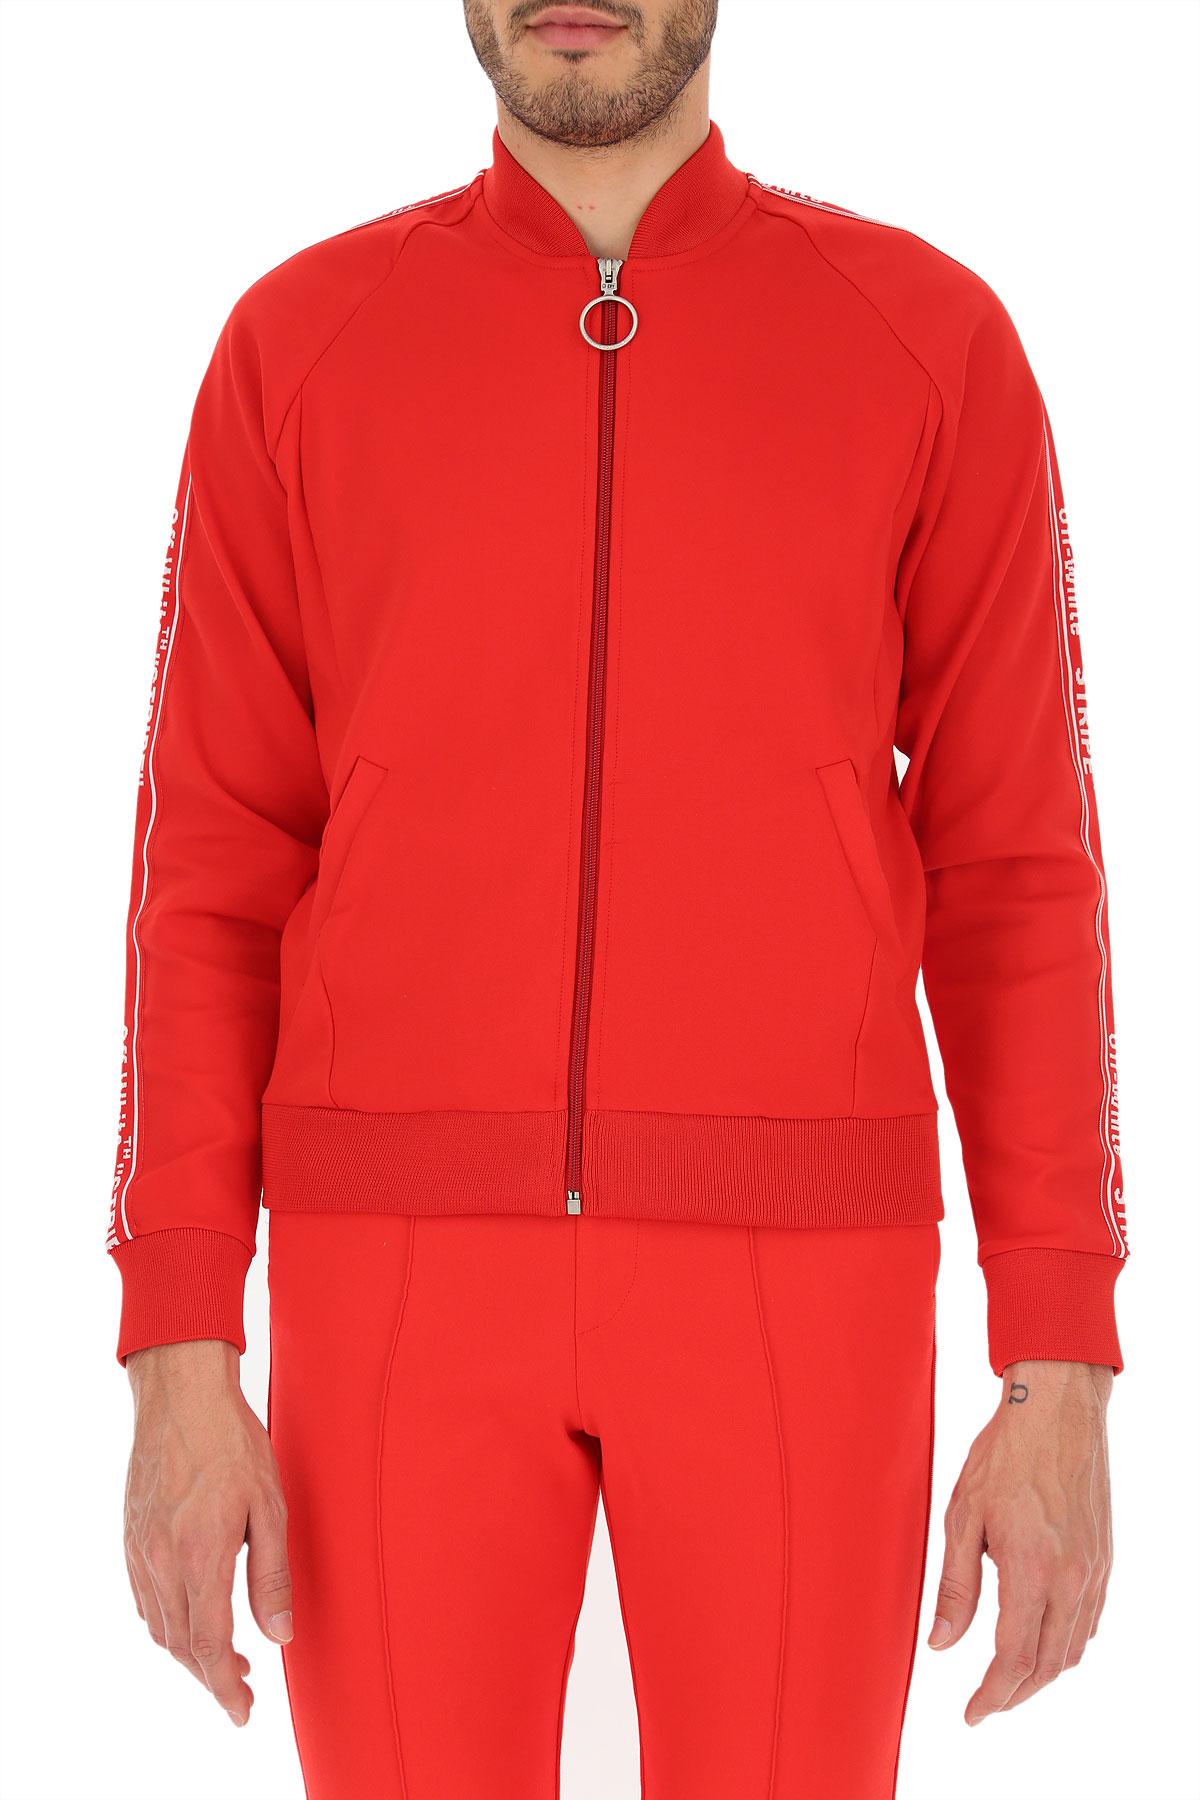 Off-White c/o Virgil Abloh Sweatshirt For Men On Sale in Red for Men - Lyst